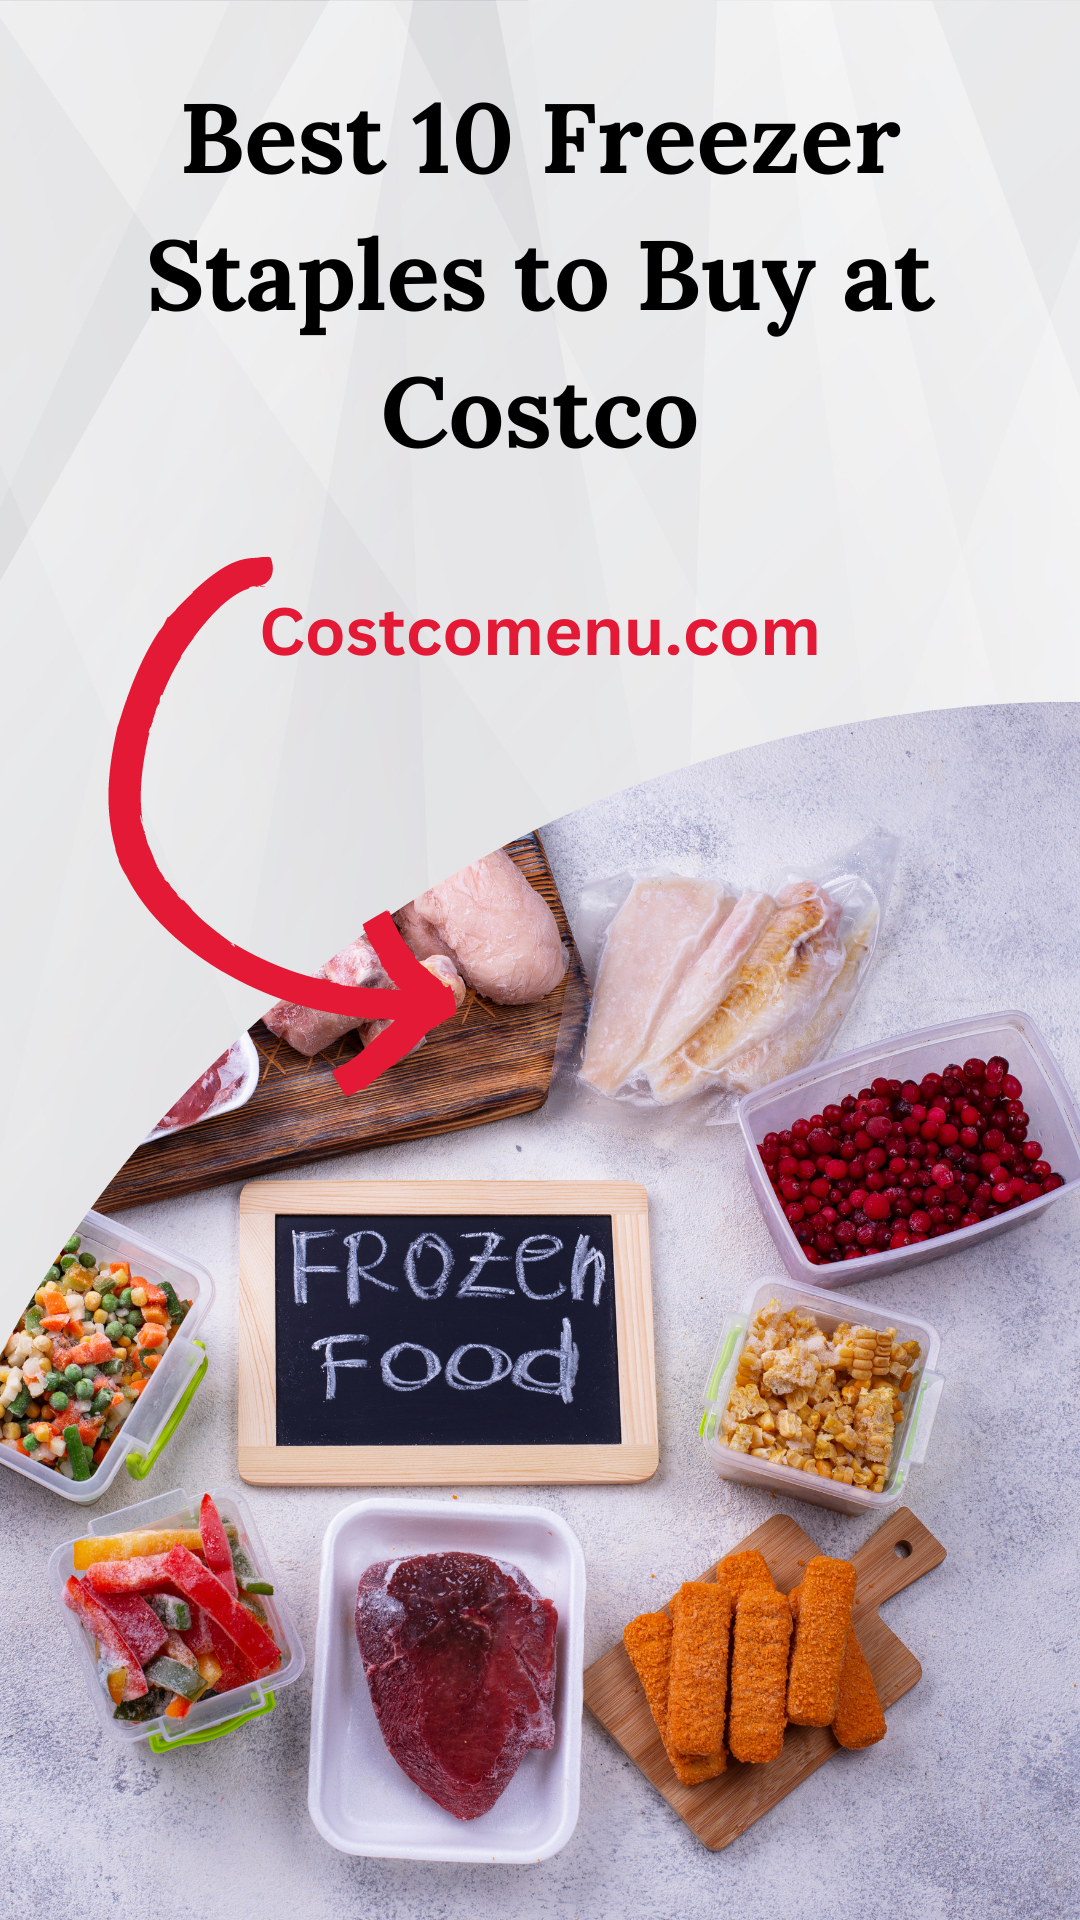 Best 10 Freezer Staples to Buy at Costco